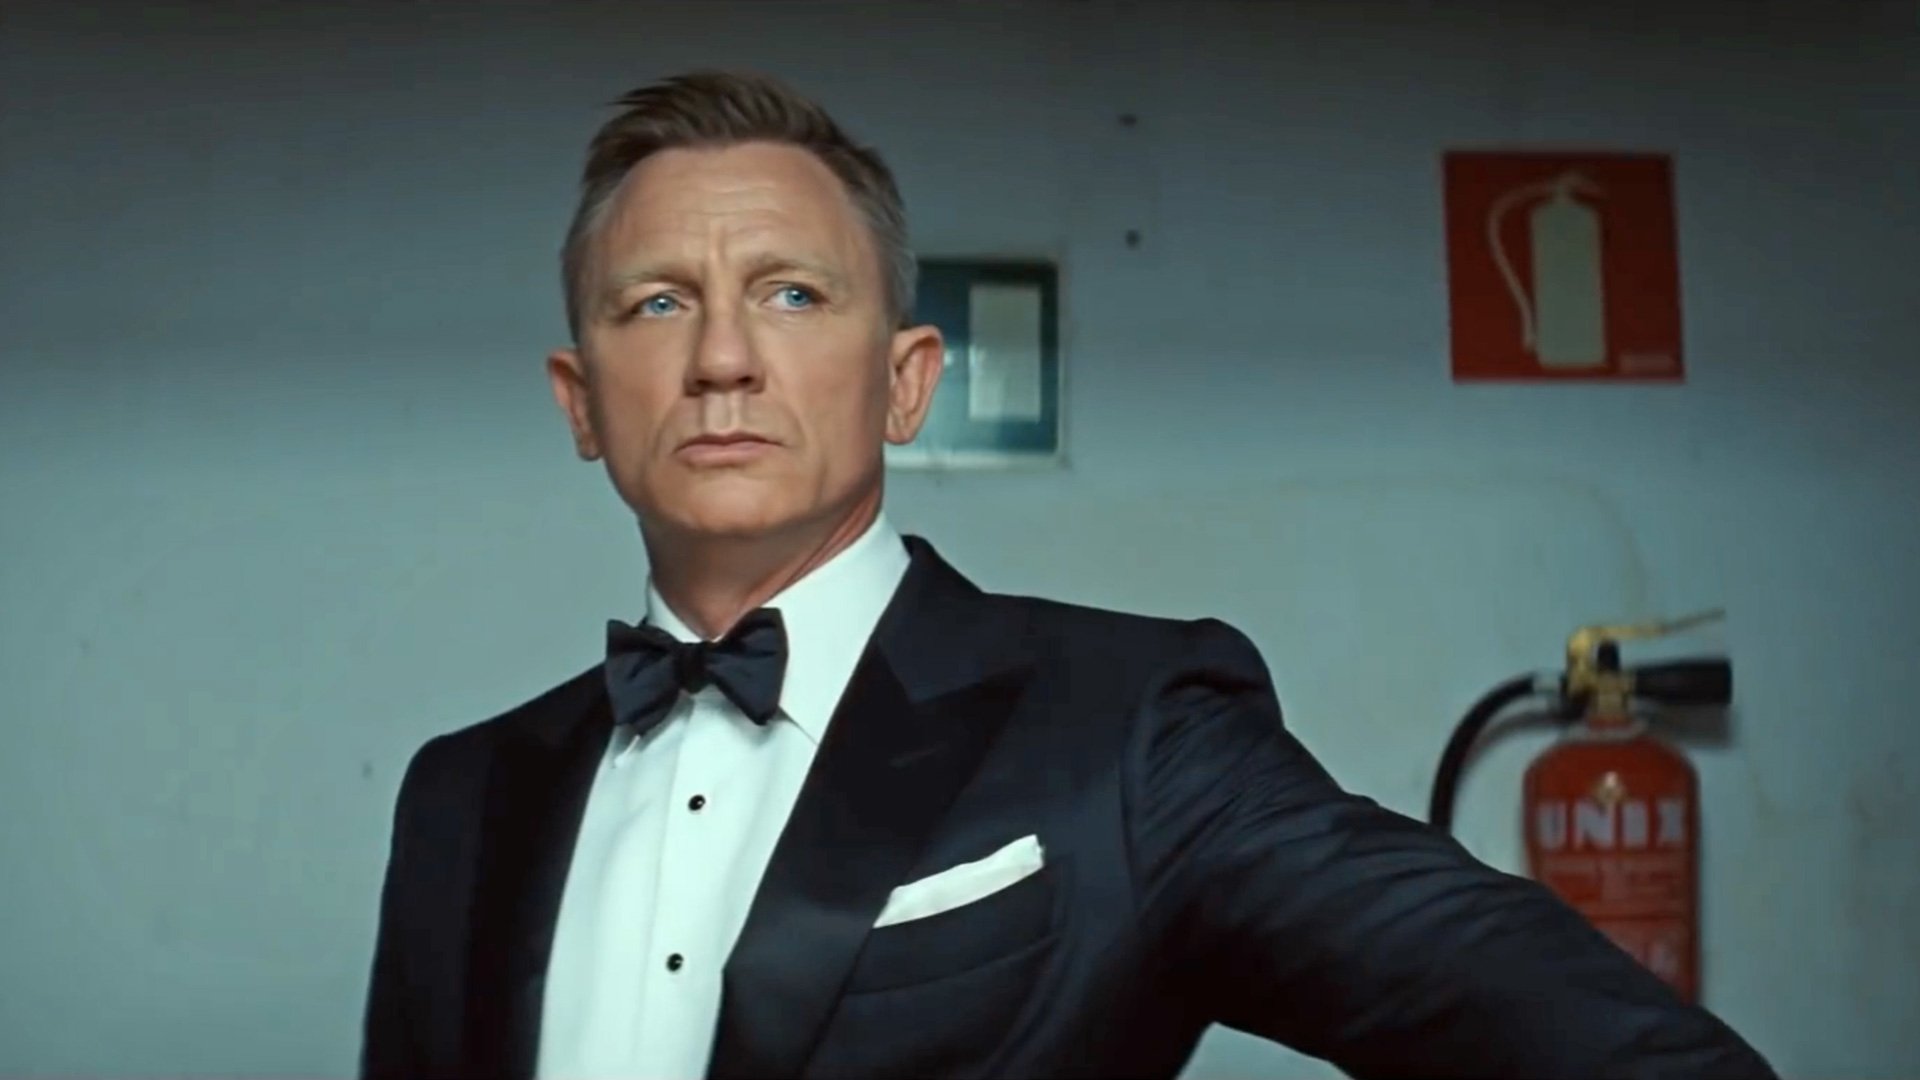 Daniel Craig wearing an evening suit